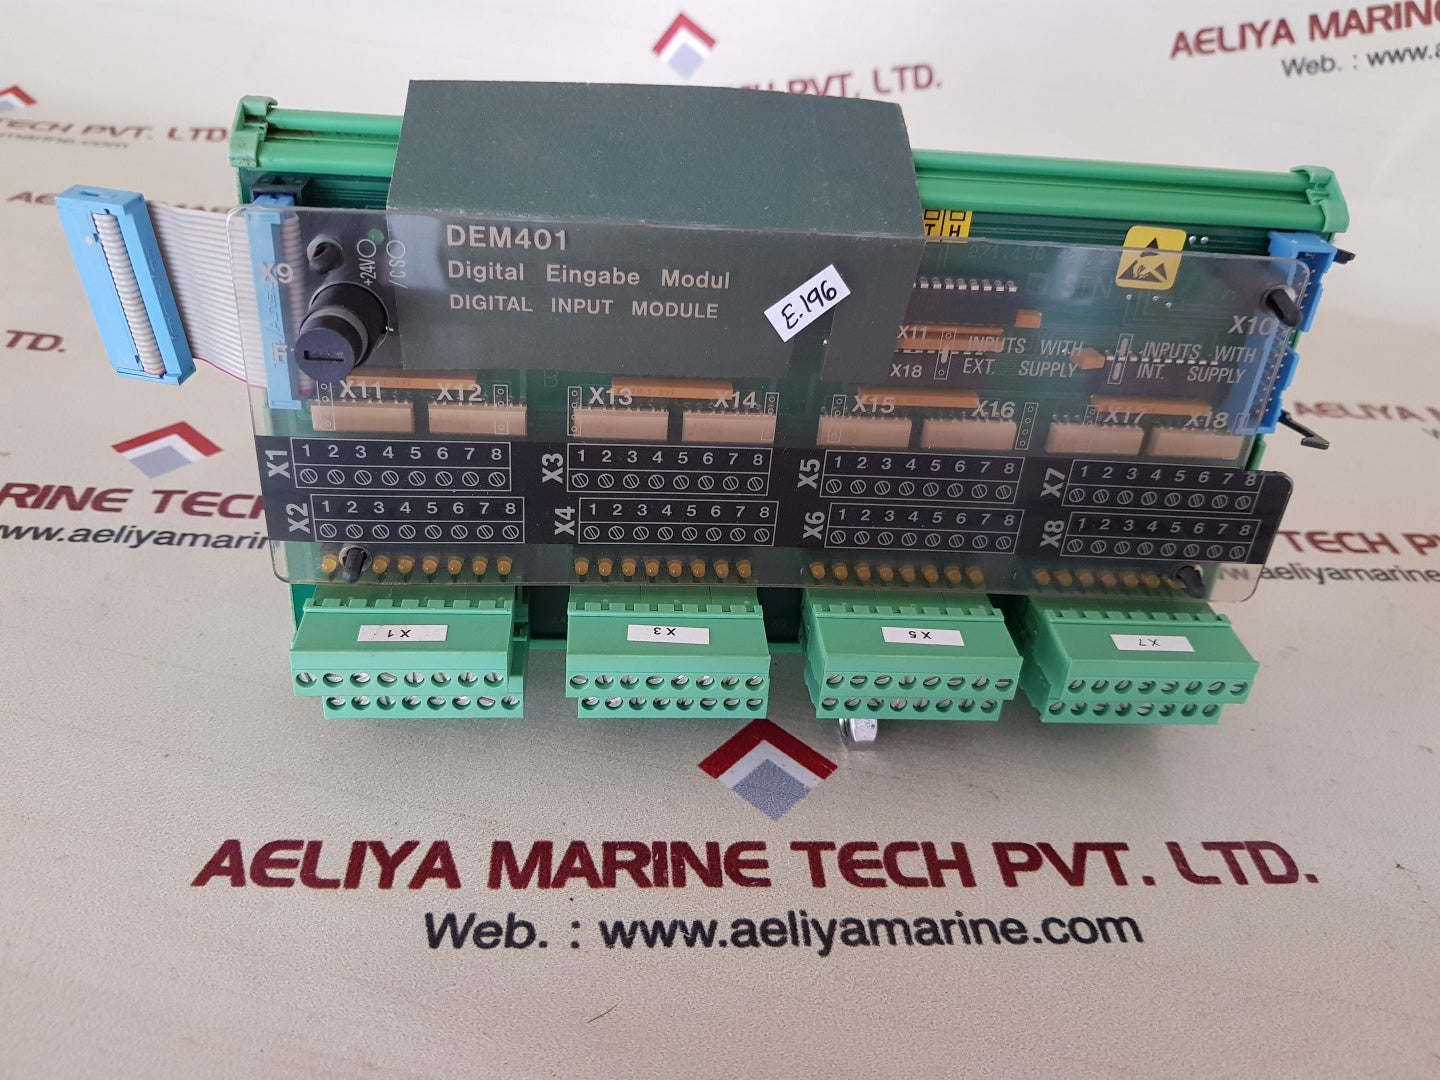 Sam electronics/lyngsoe marine dem 401 digital input module